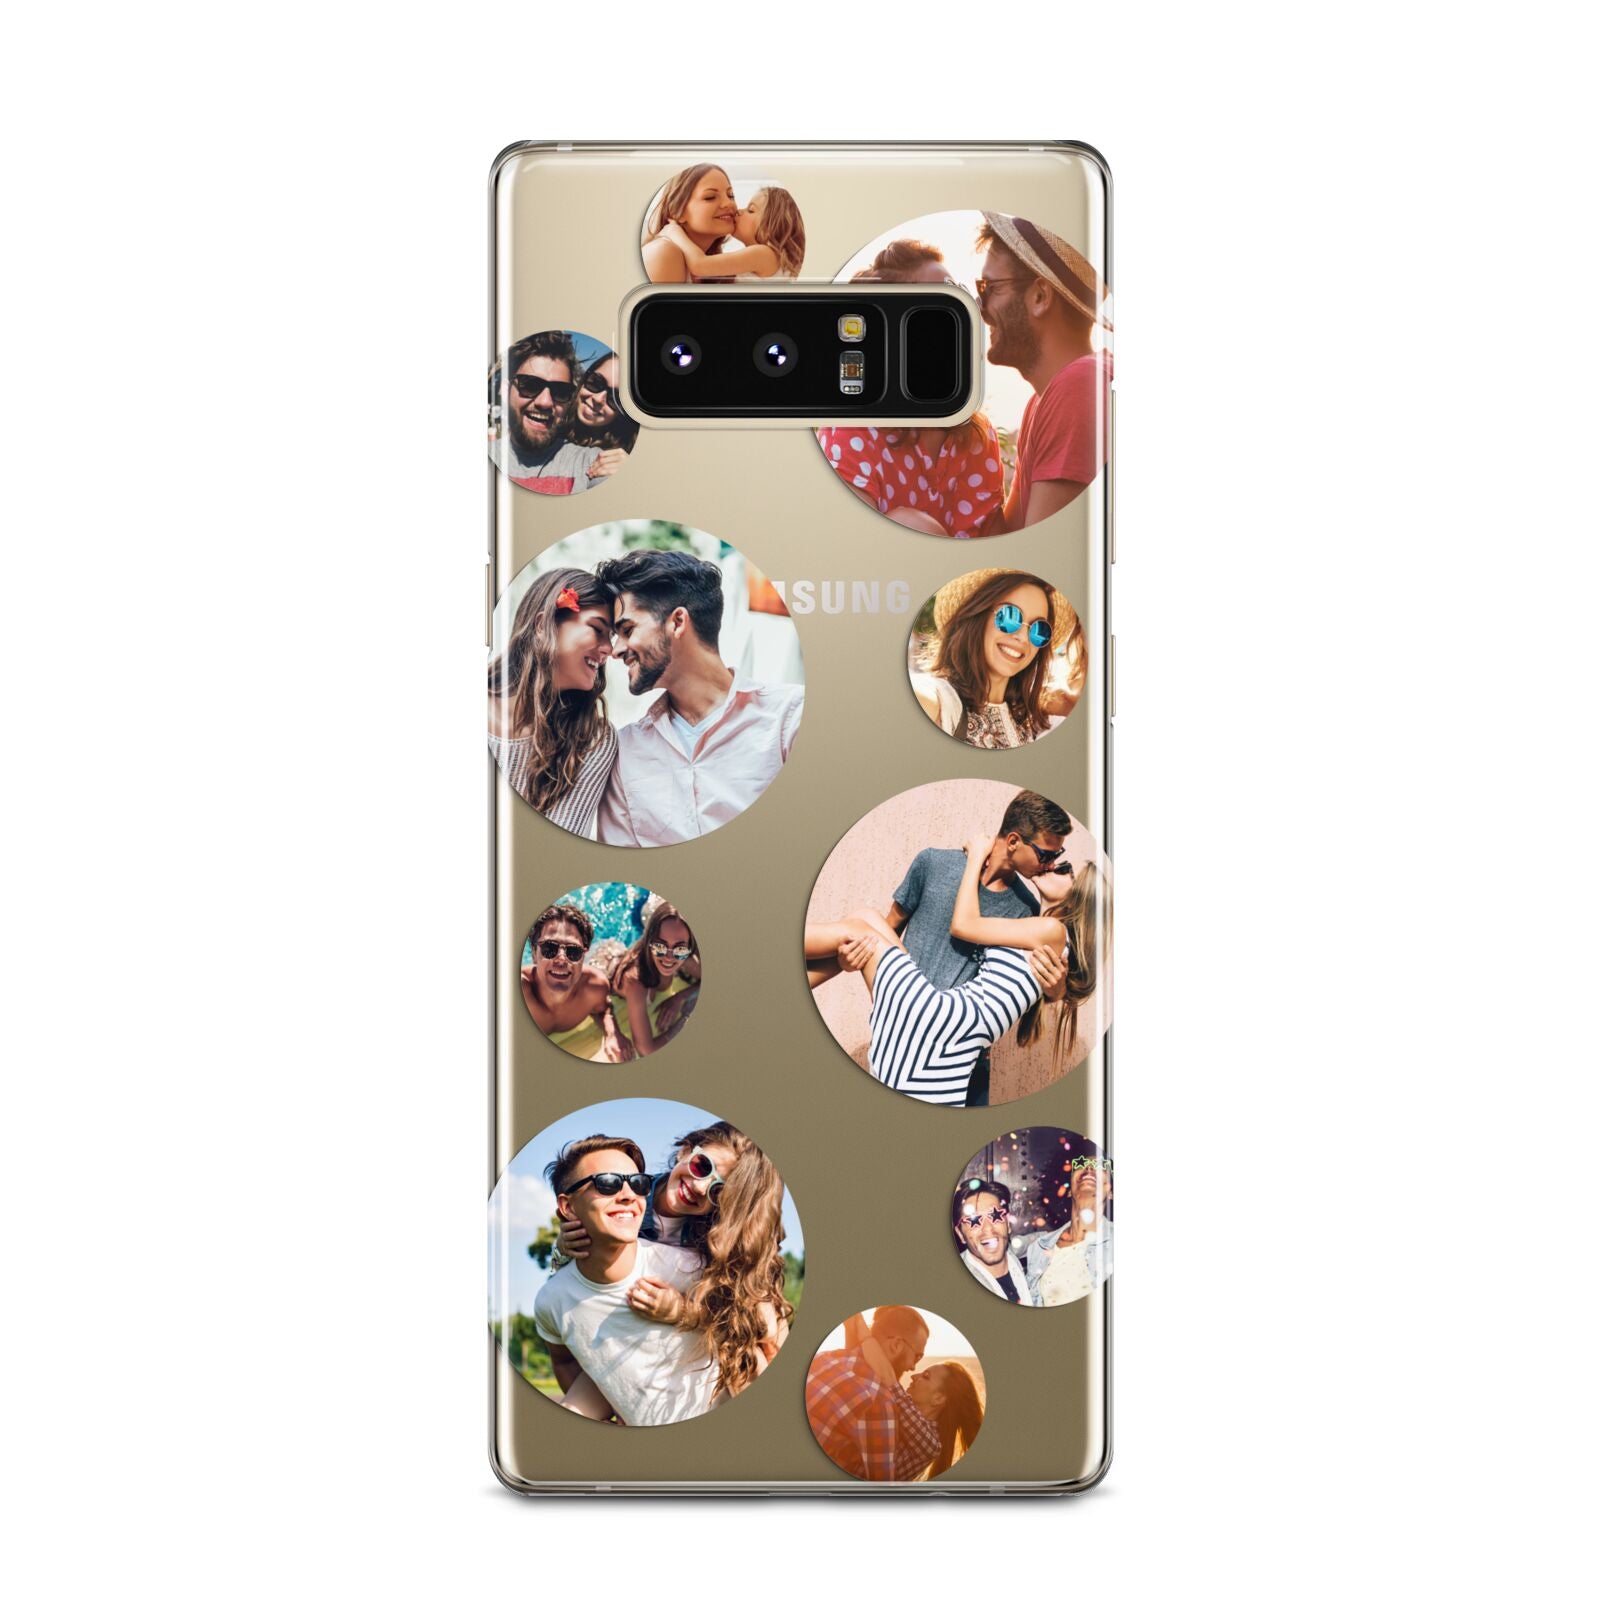 Multi Circular Photo Collage Upload Samsung Galaxy Note 8 Case